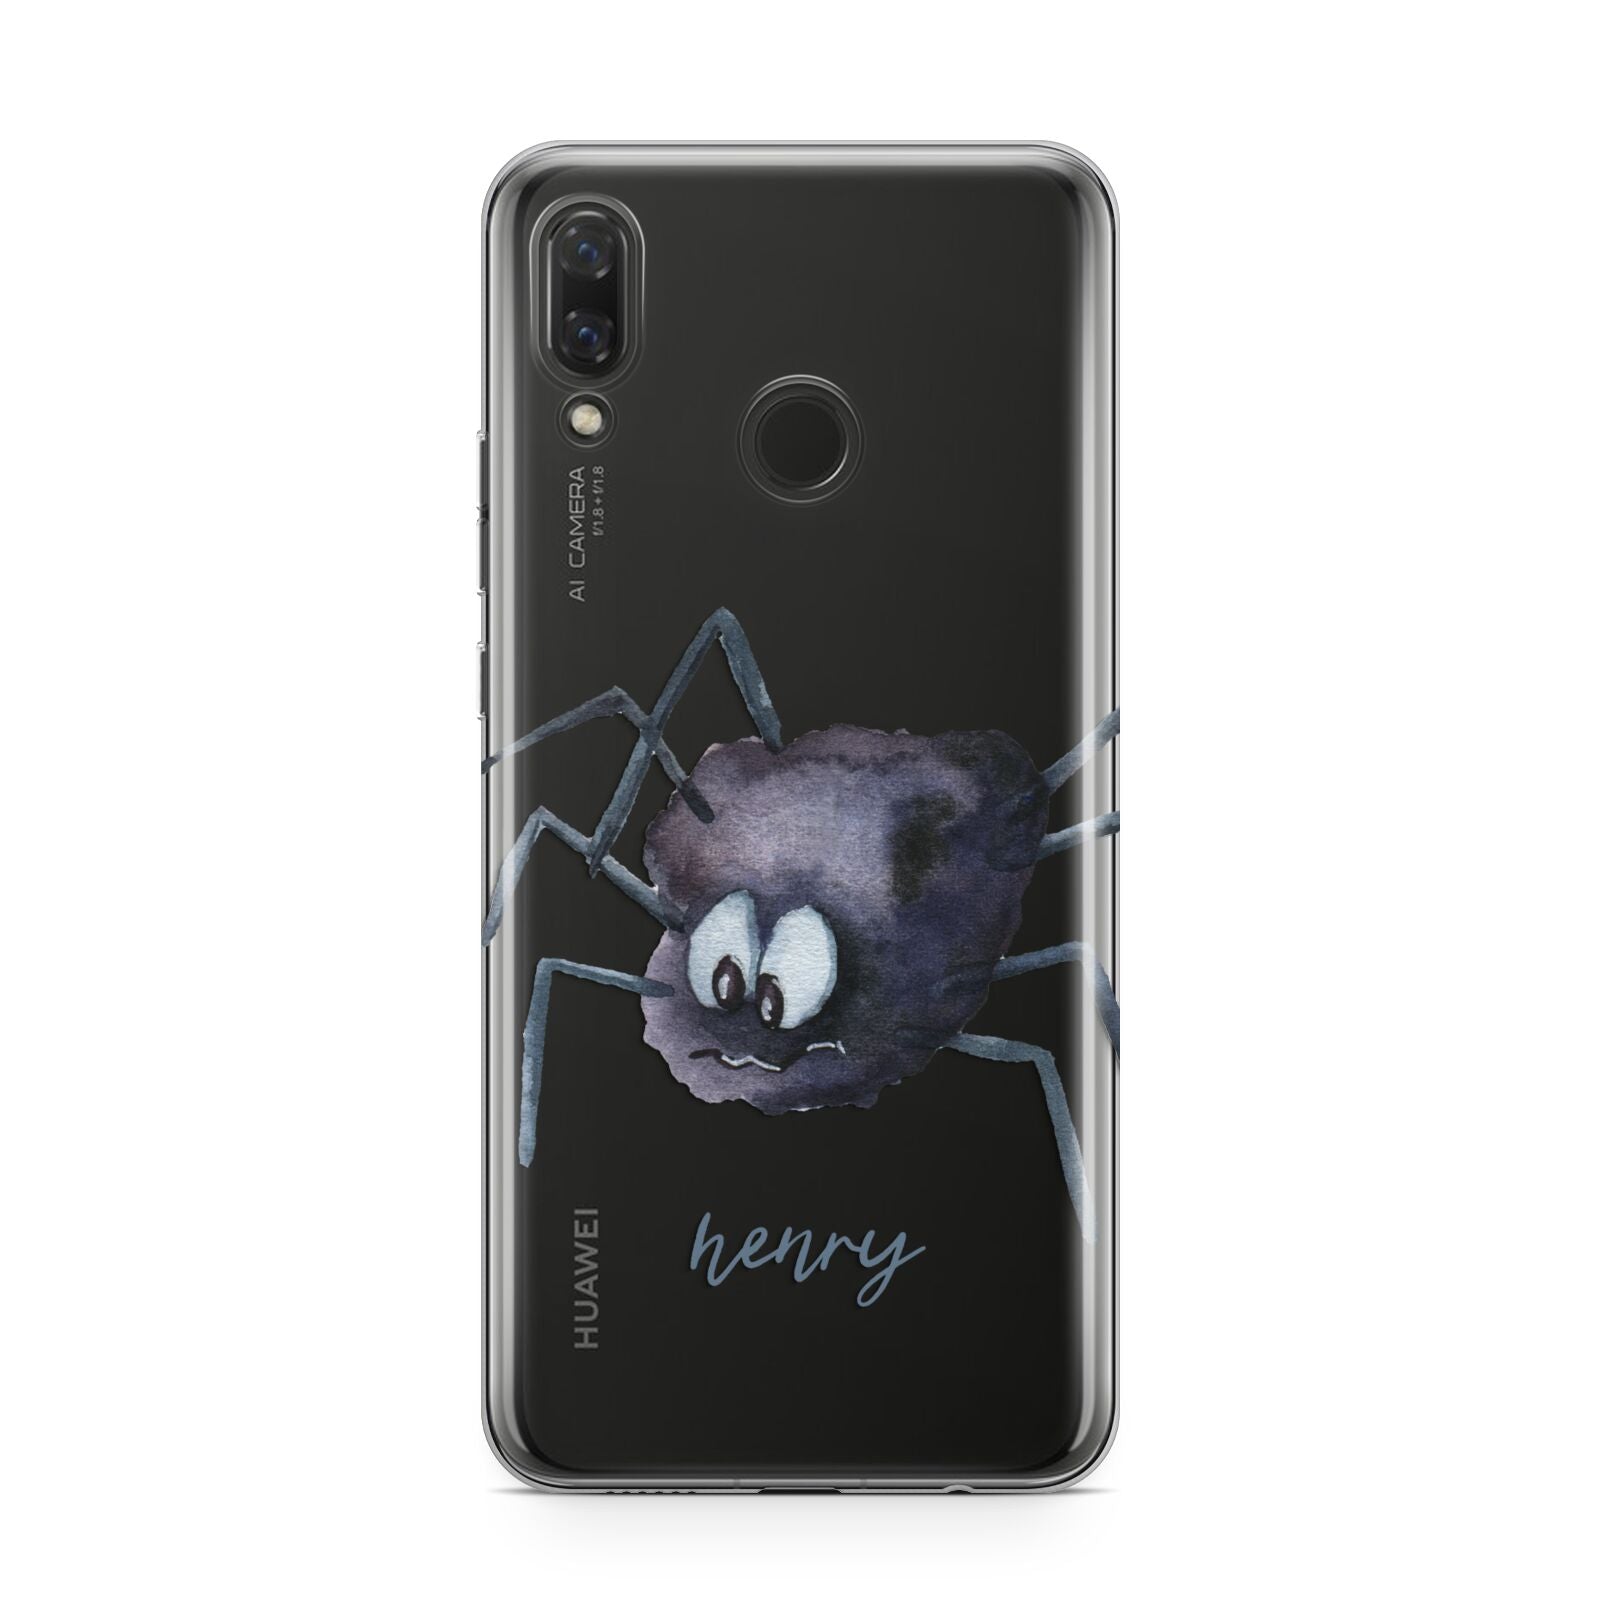 Scared Spider Personalised Huawei Nova 3 Phone Case